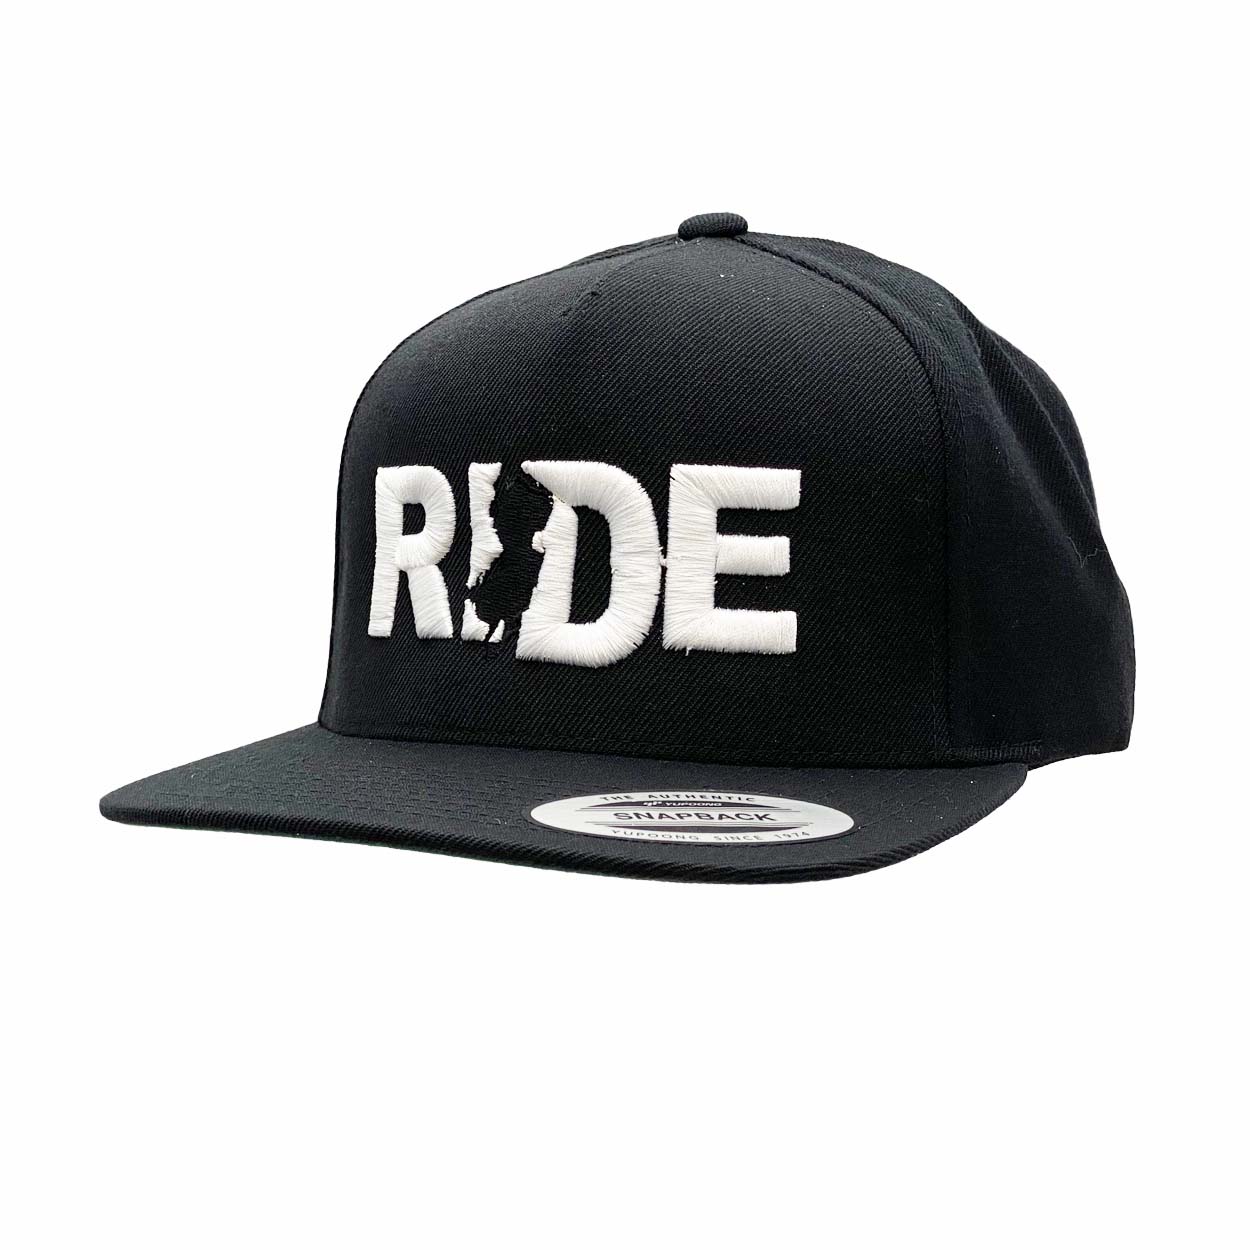 Ride New Jersey Classic Embroidered  Snapback Flat Brim Hat Black